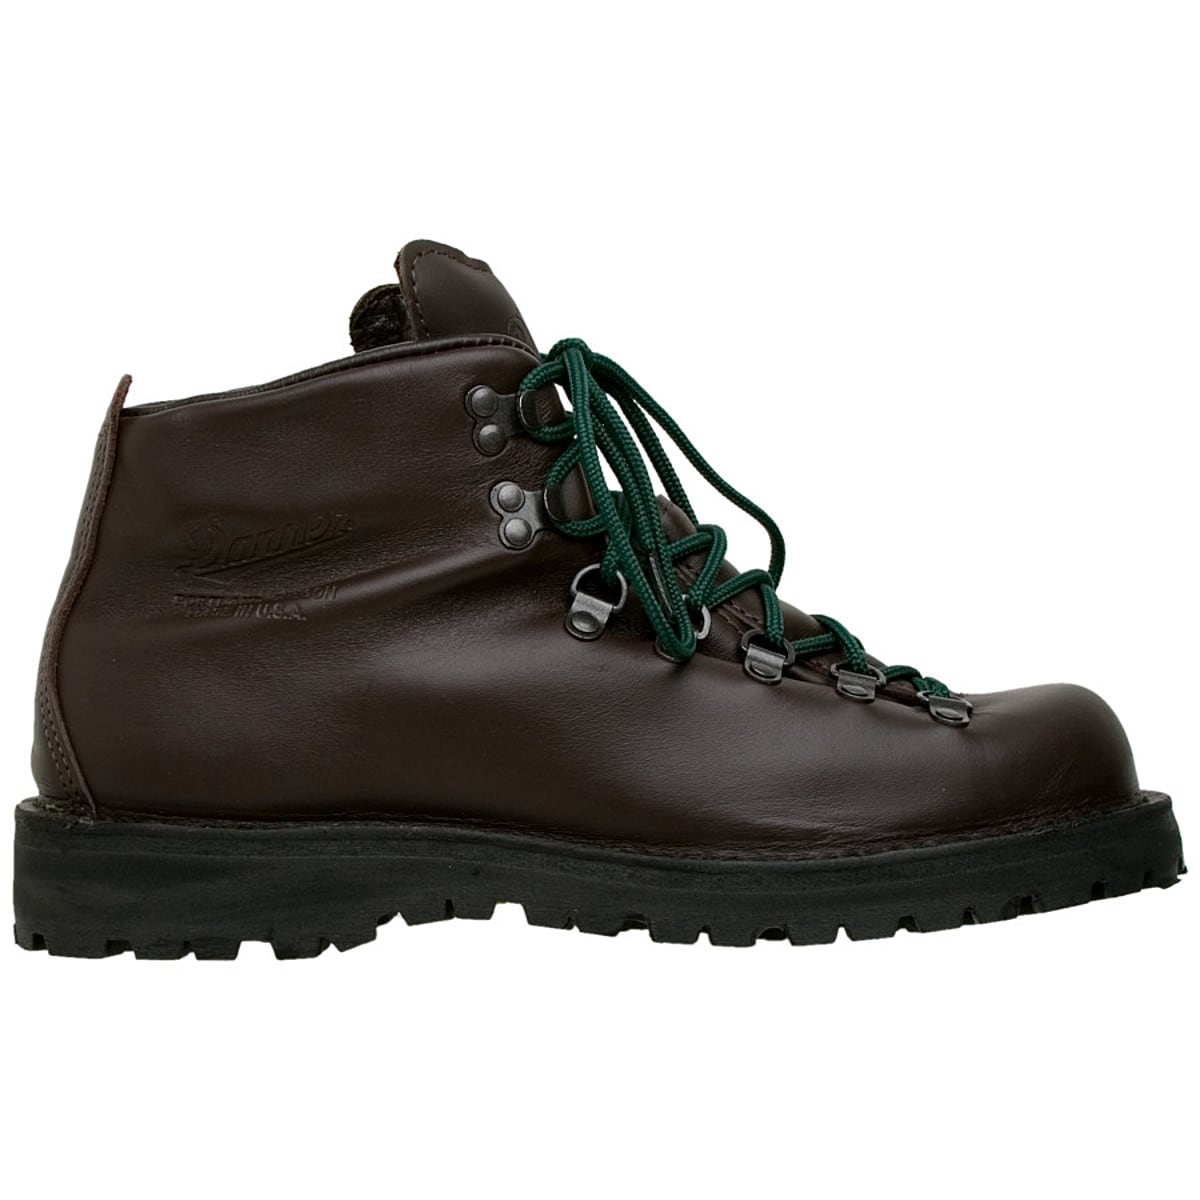 Danner Mountain Light 2 Leather Hiking Boot - Men's - Footwear